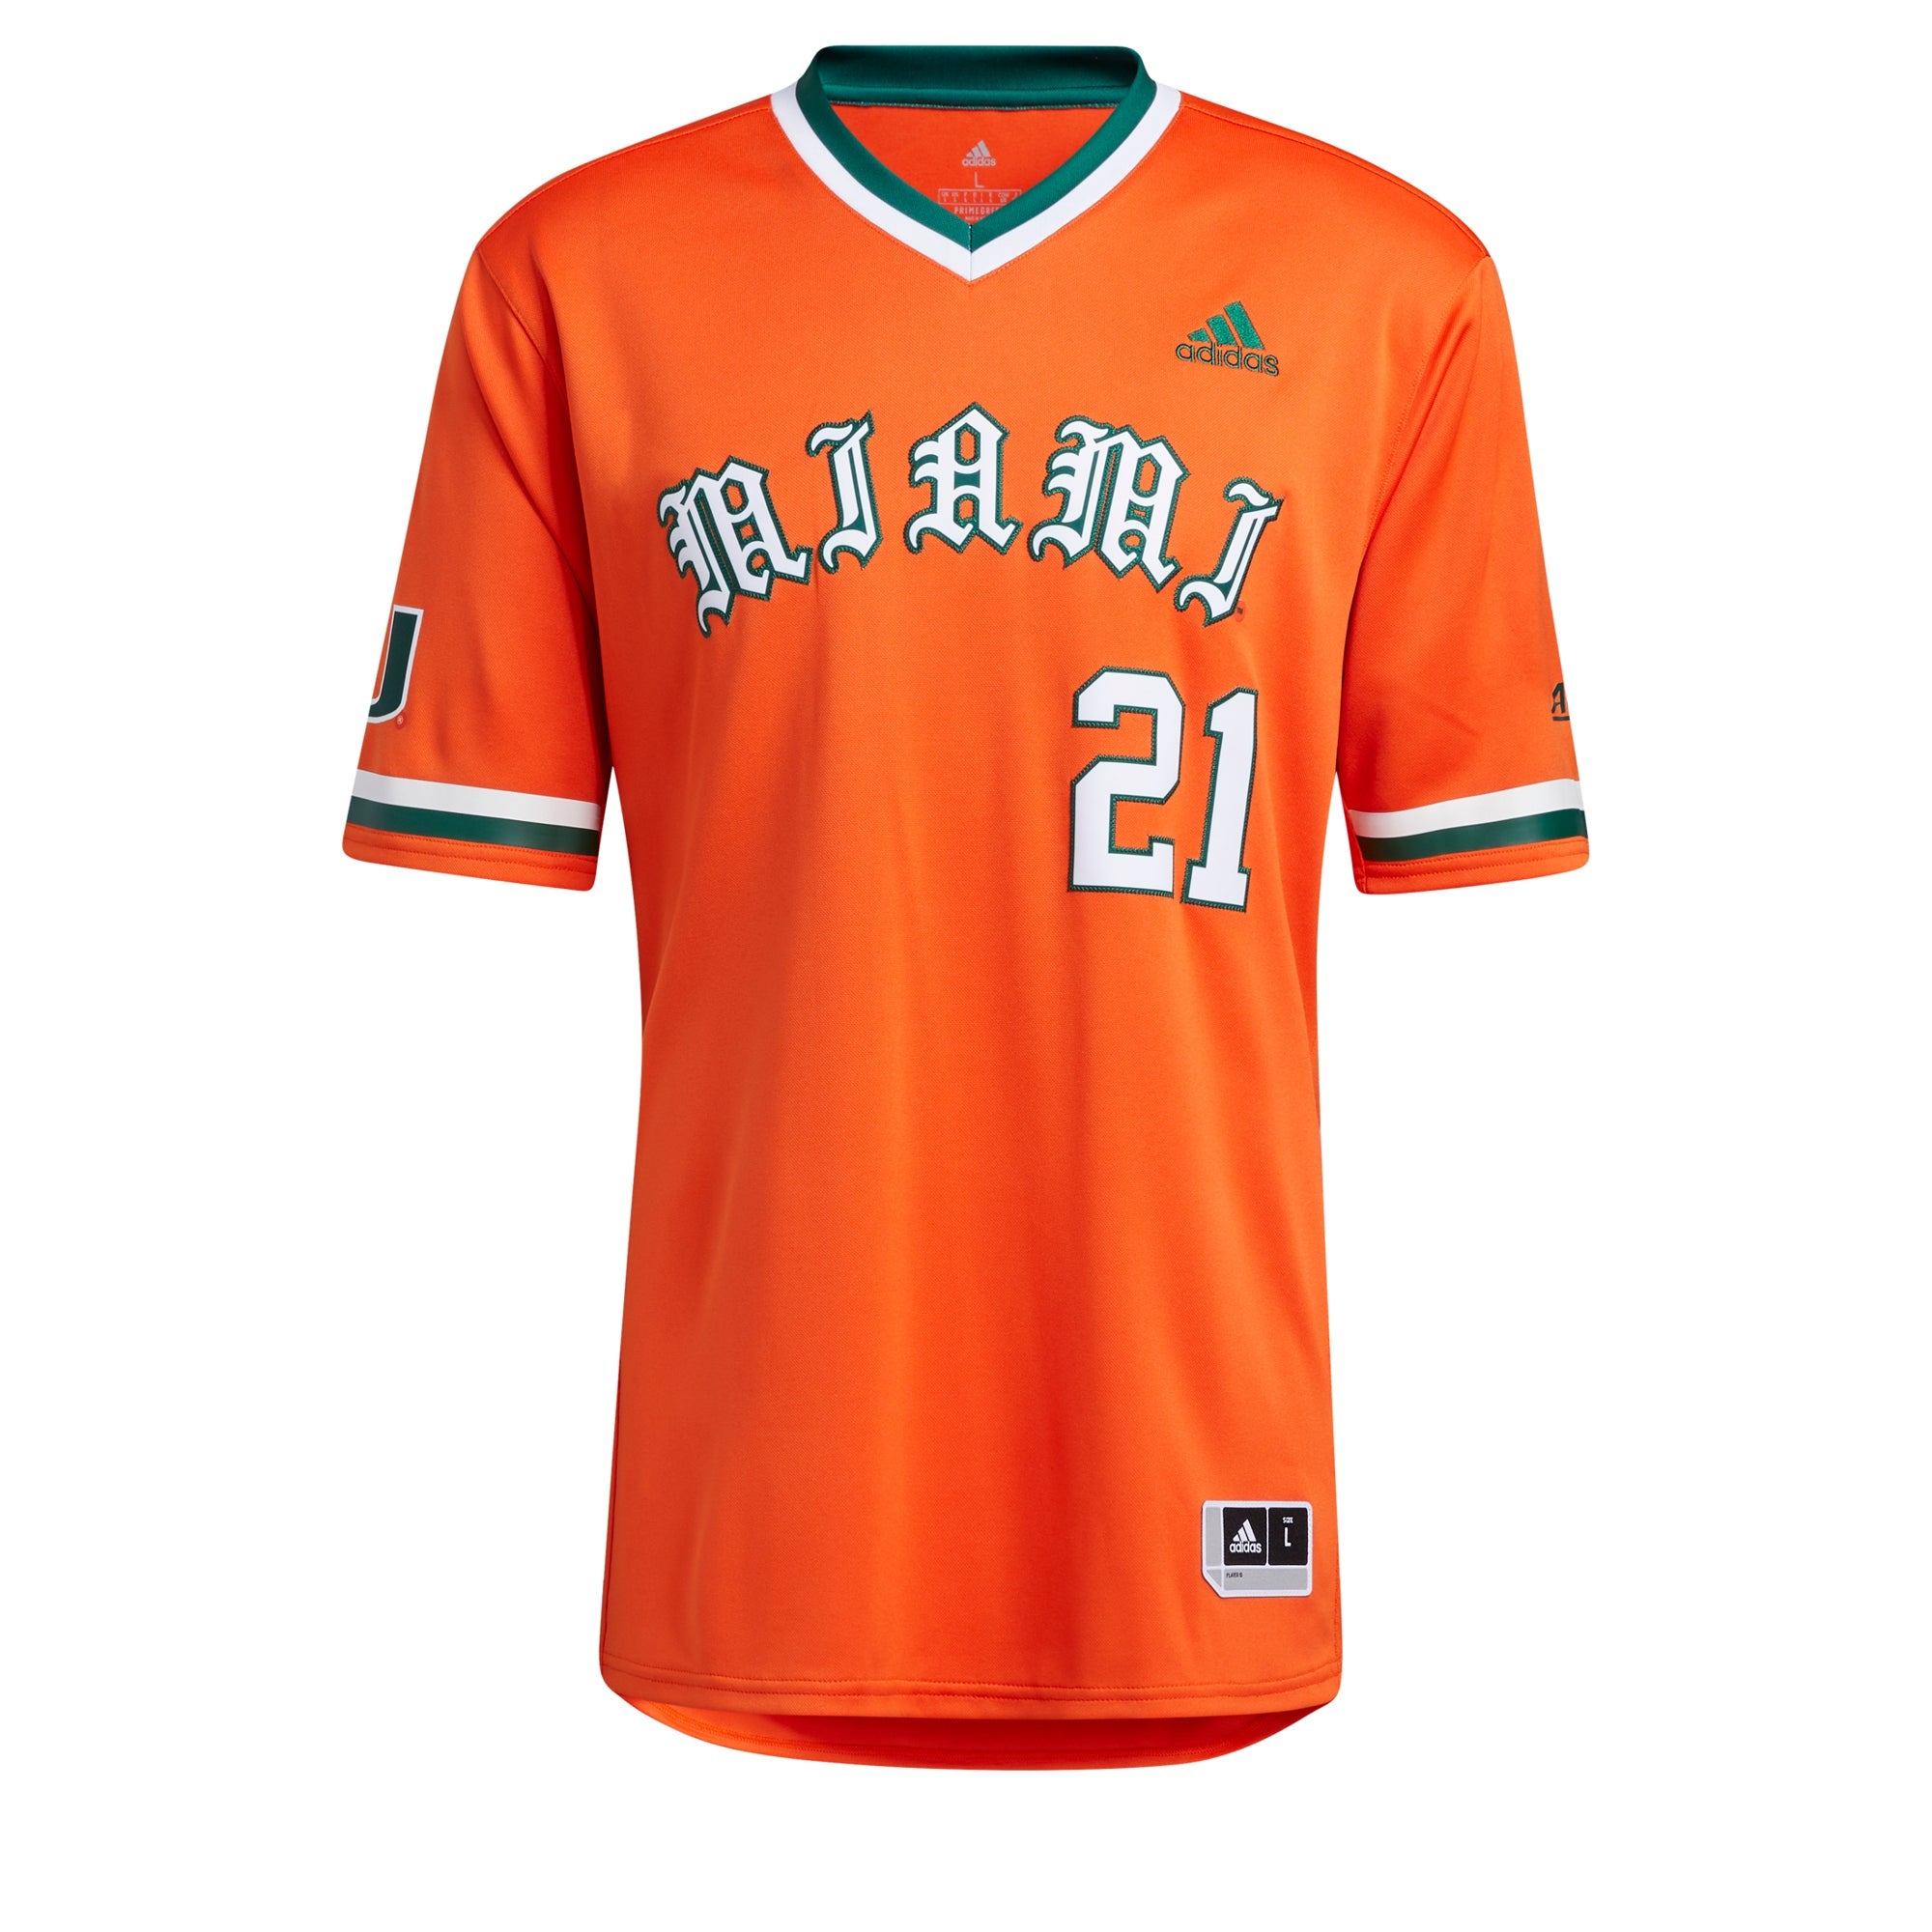 #22 Miami Hurricanes adidas Button-Up Baseball Jersey - Green